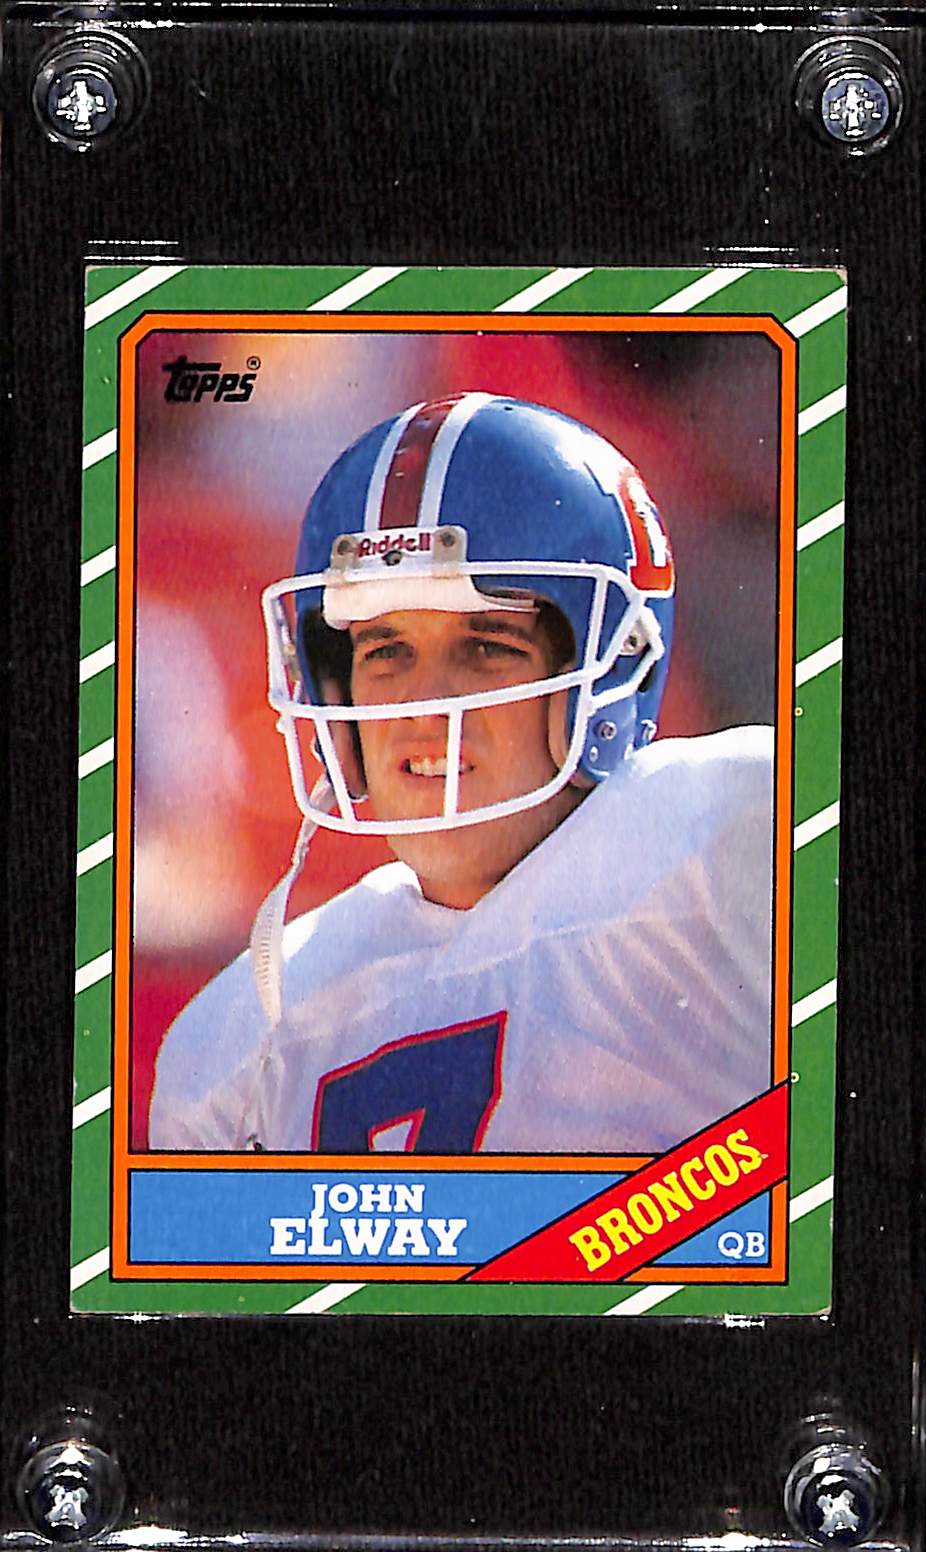 FIINR Football Card 1986 Topps John Elway NFL Broncos Football Card #112 - Mint Condition